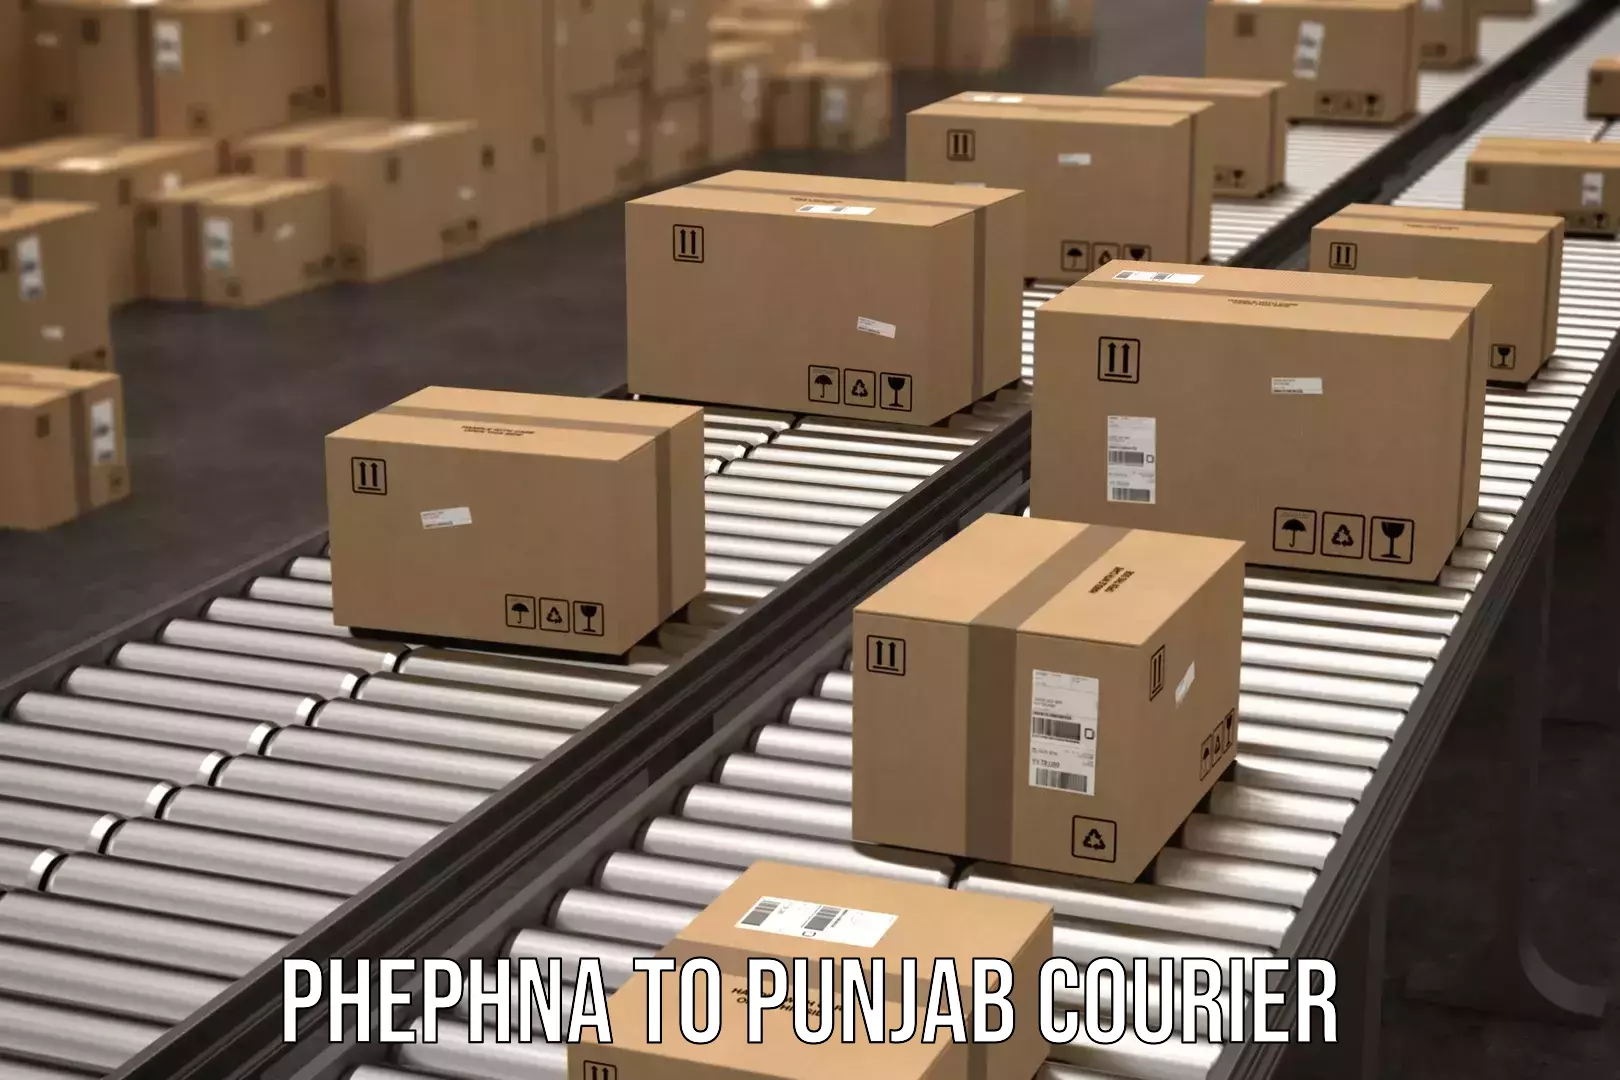 Advanced courier platforms Phephna to Punjab